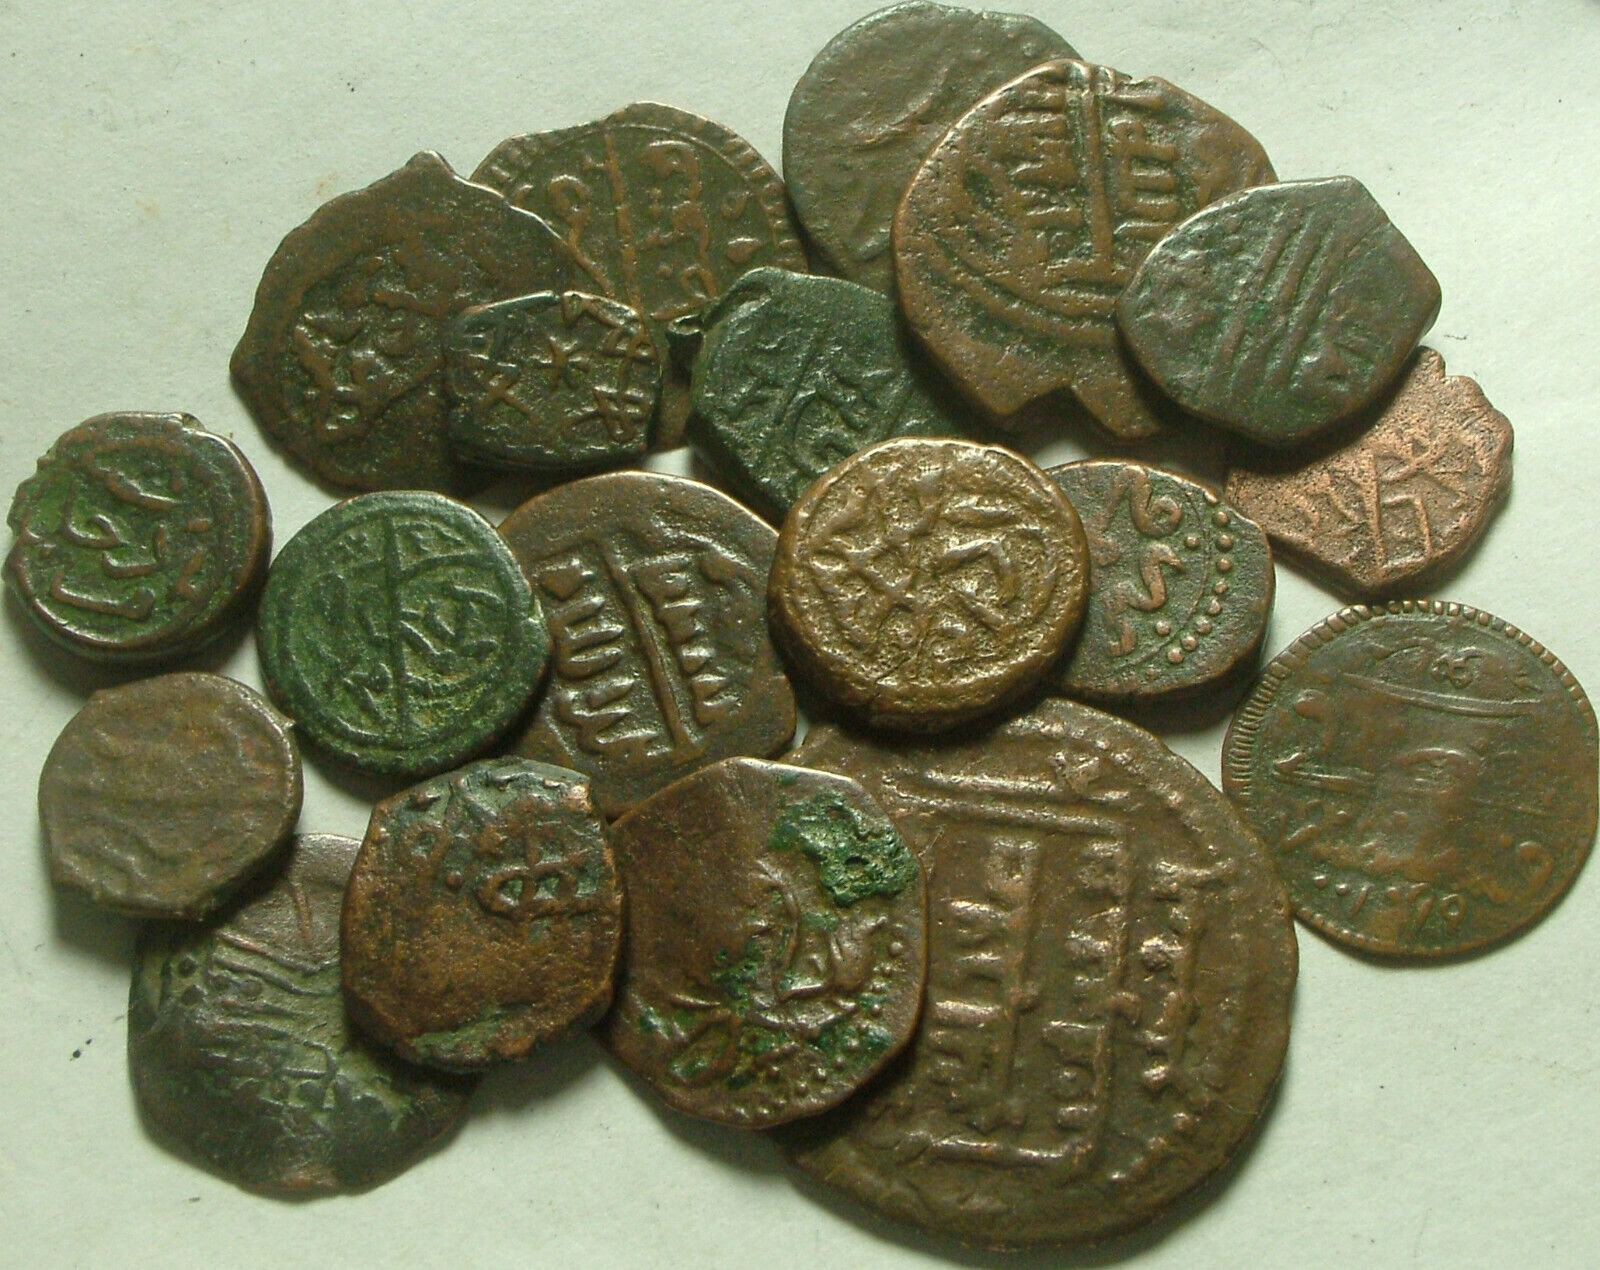 Lot 3 Rare original Islamic copper Bronze Mangir coins/Arabic/Ottoman Empire 15c Без бренда - фотография #8